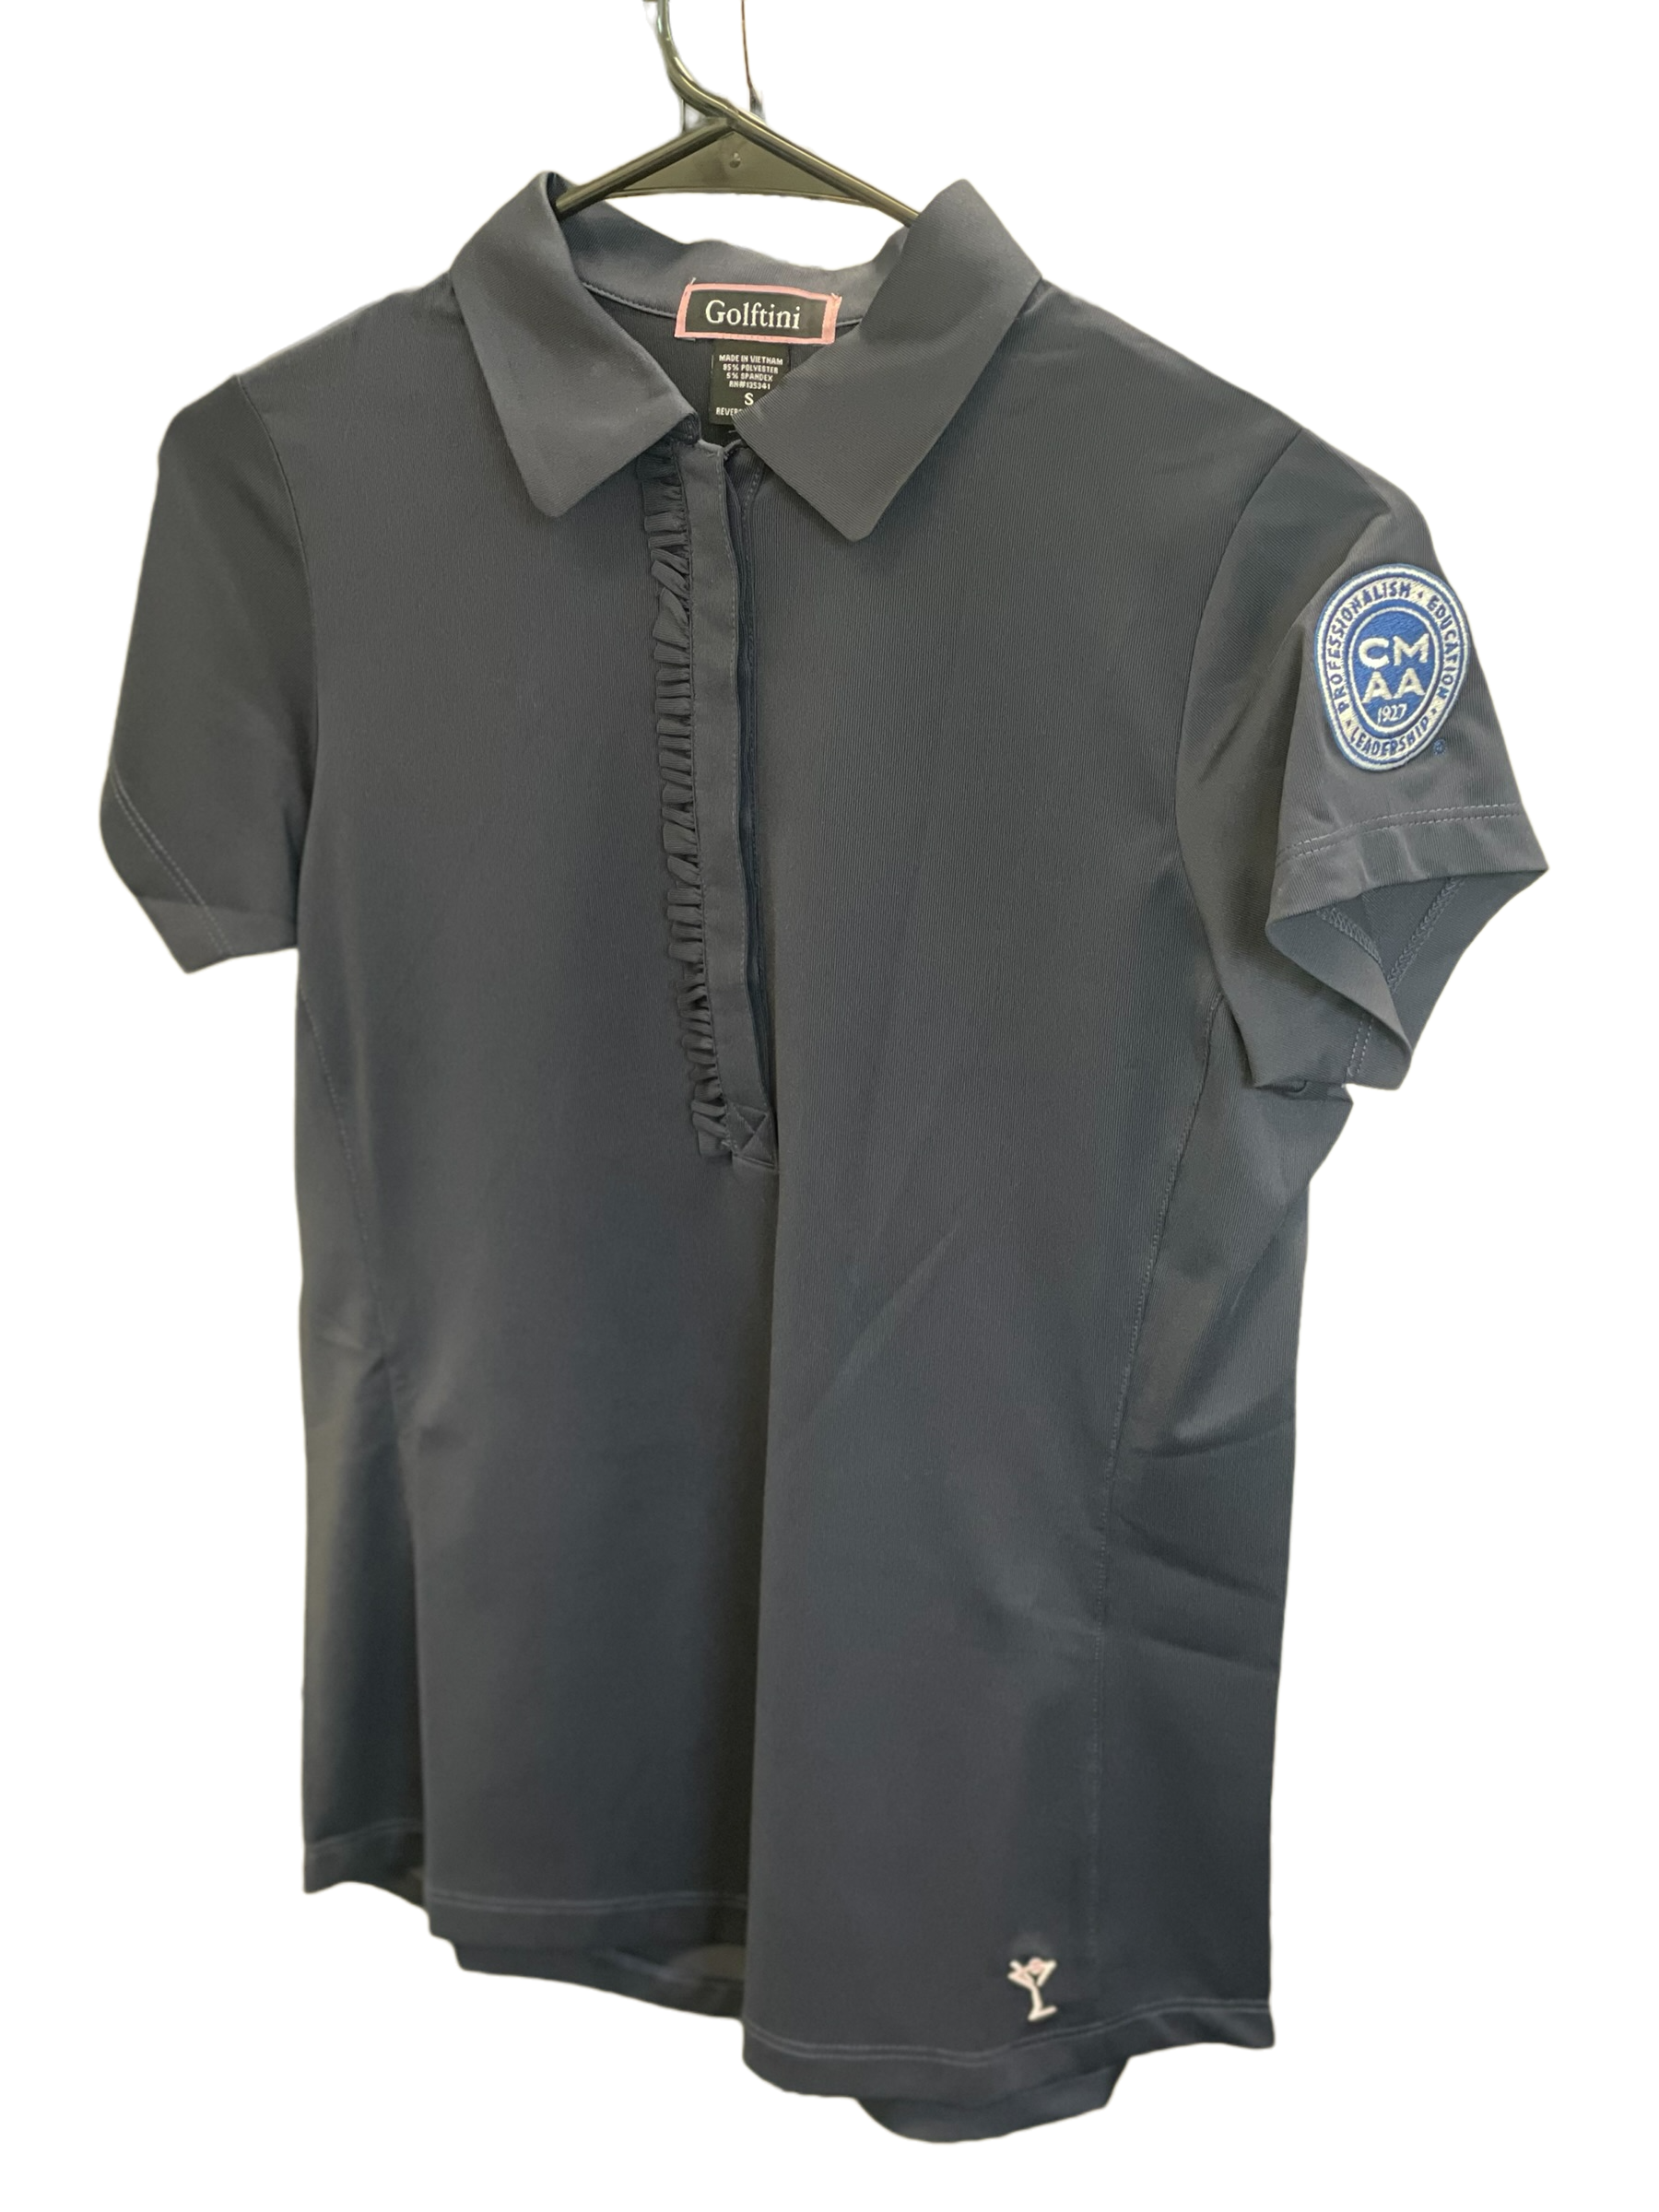 Golftini Ladies' Short Sleeve Ruffle Polo